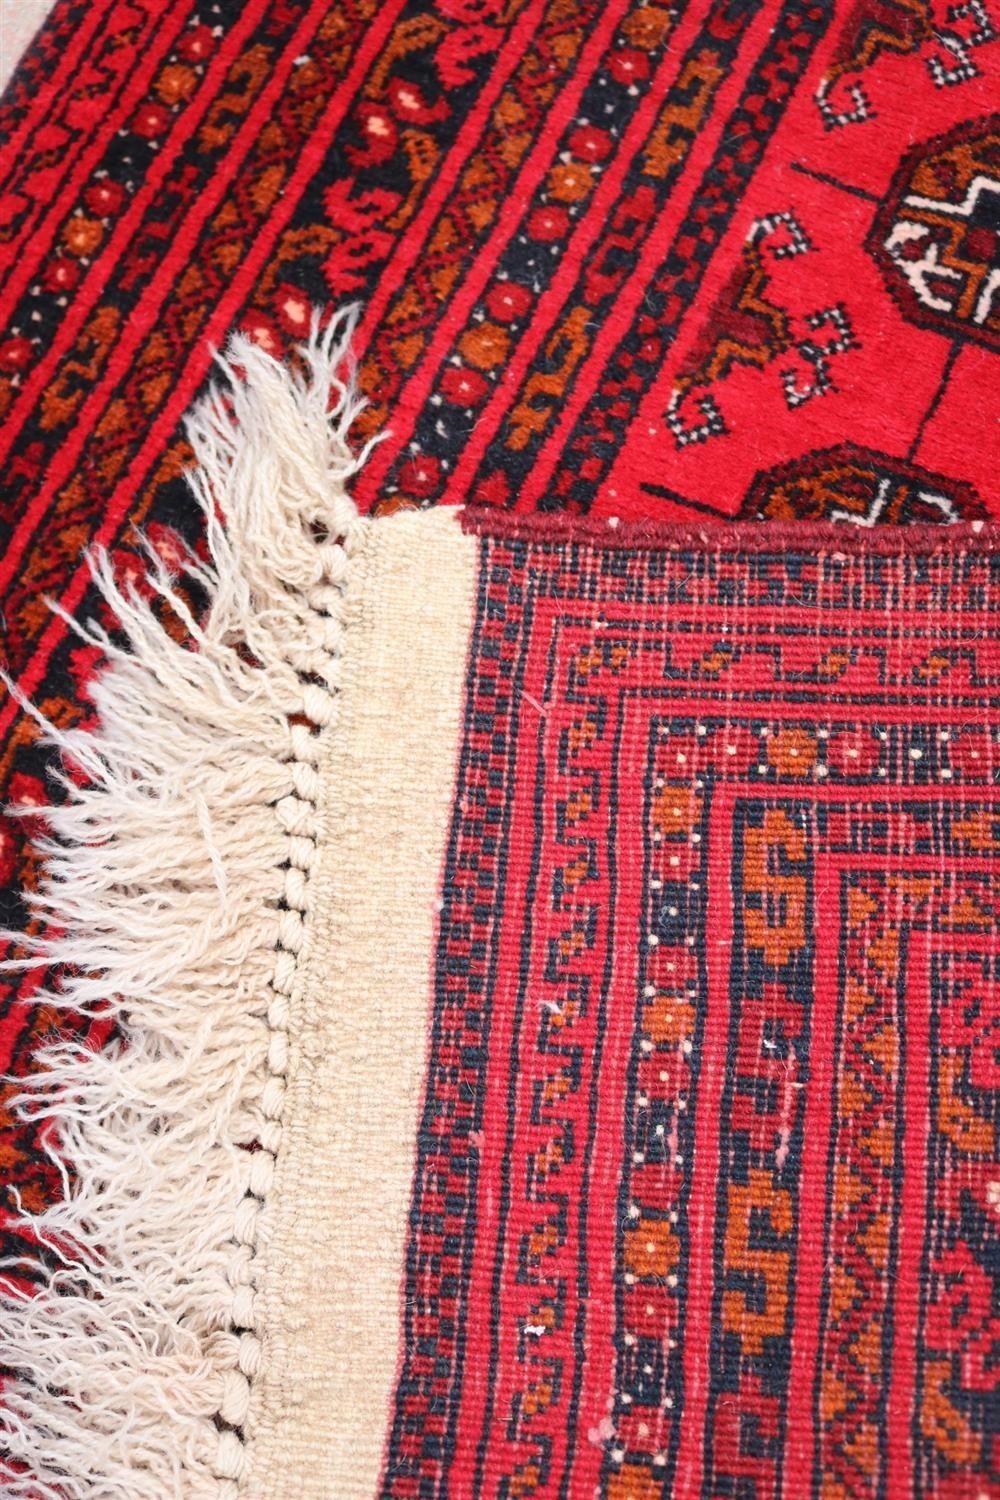 Fabric Deep Red Turkestan Runner w/ Traditional Patterns & Motifs For Sale